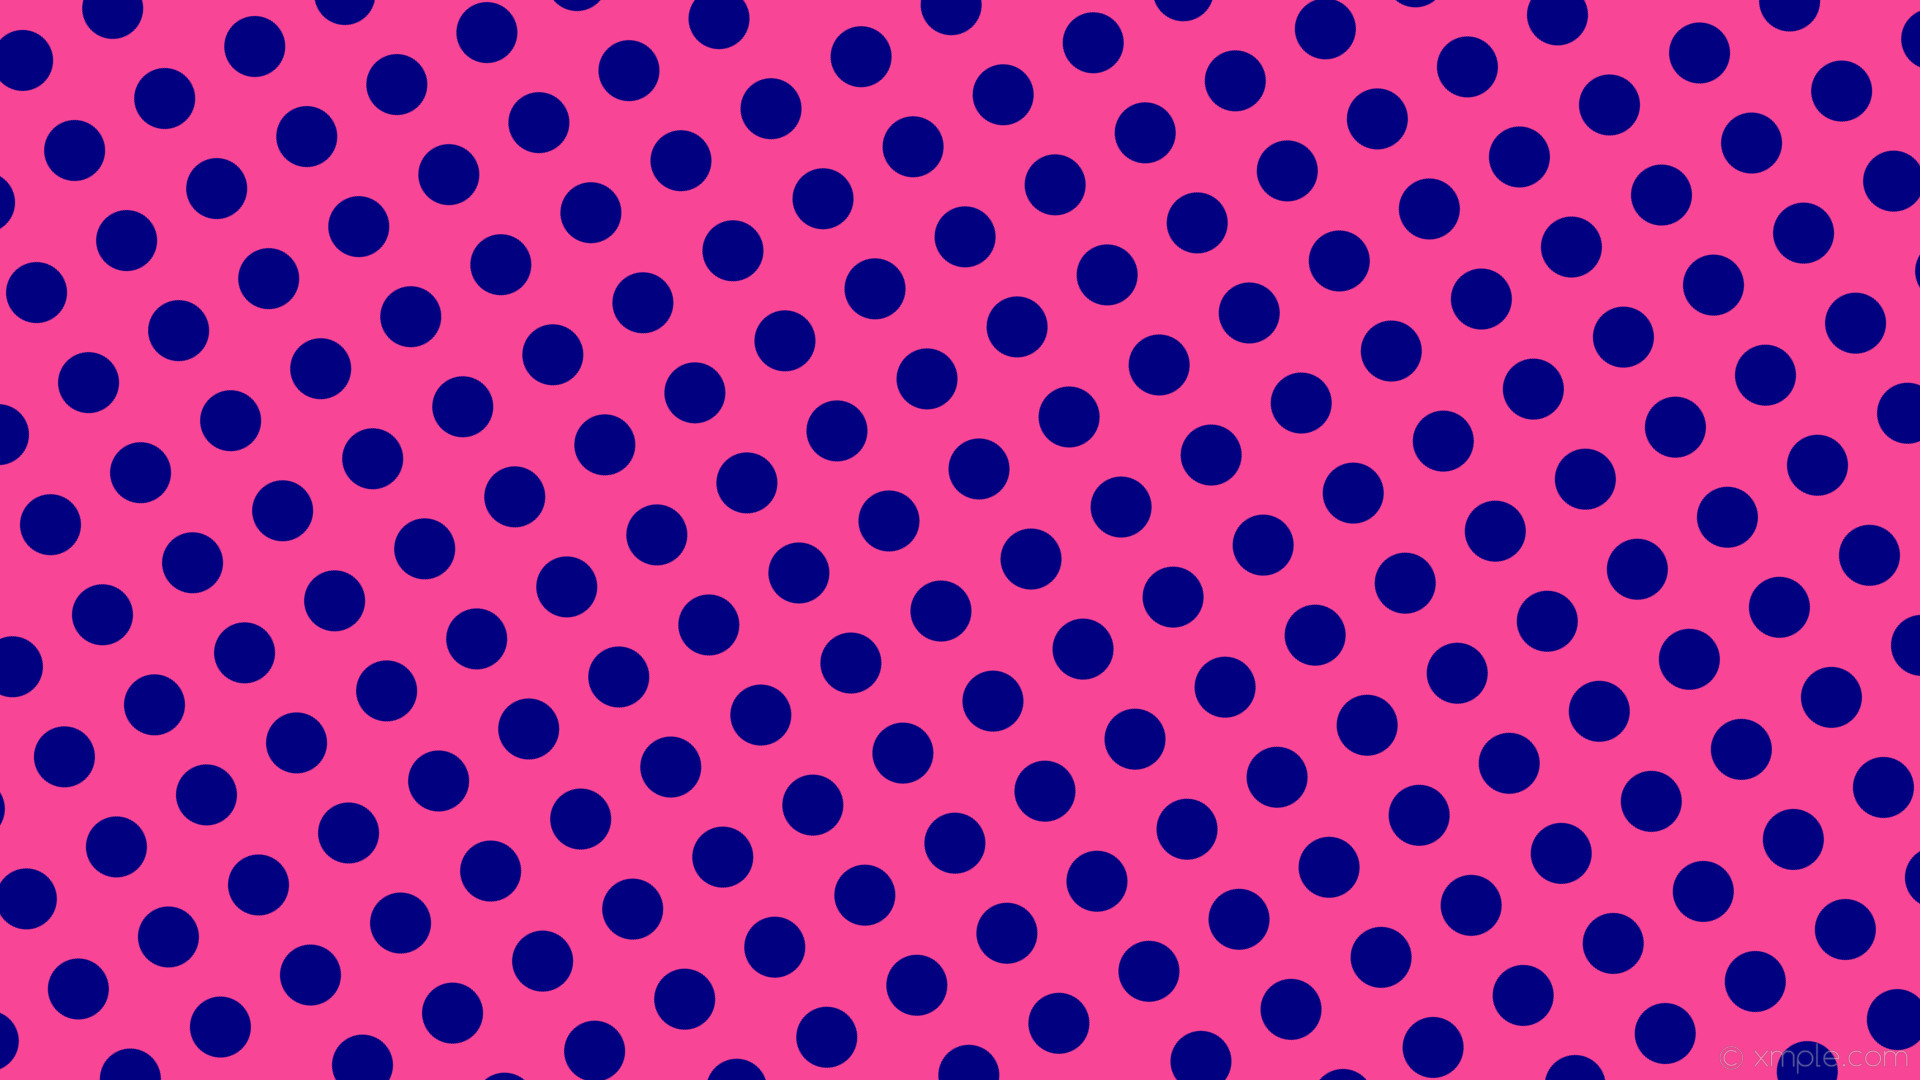 1920x1080 wallpaper polka dots spots blue pink navy #f84595 #000080 120Â° 61px 104px